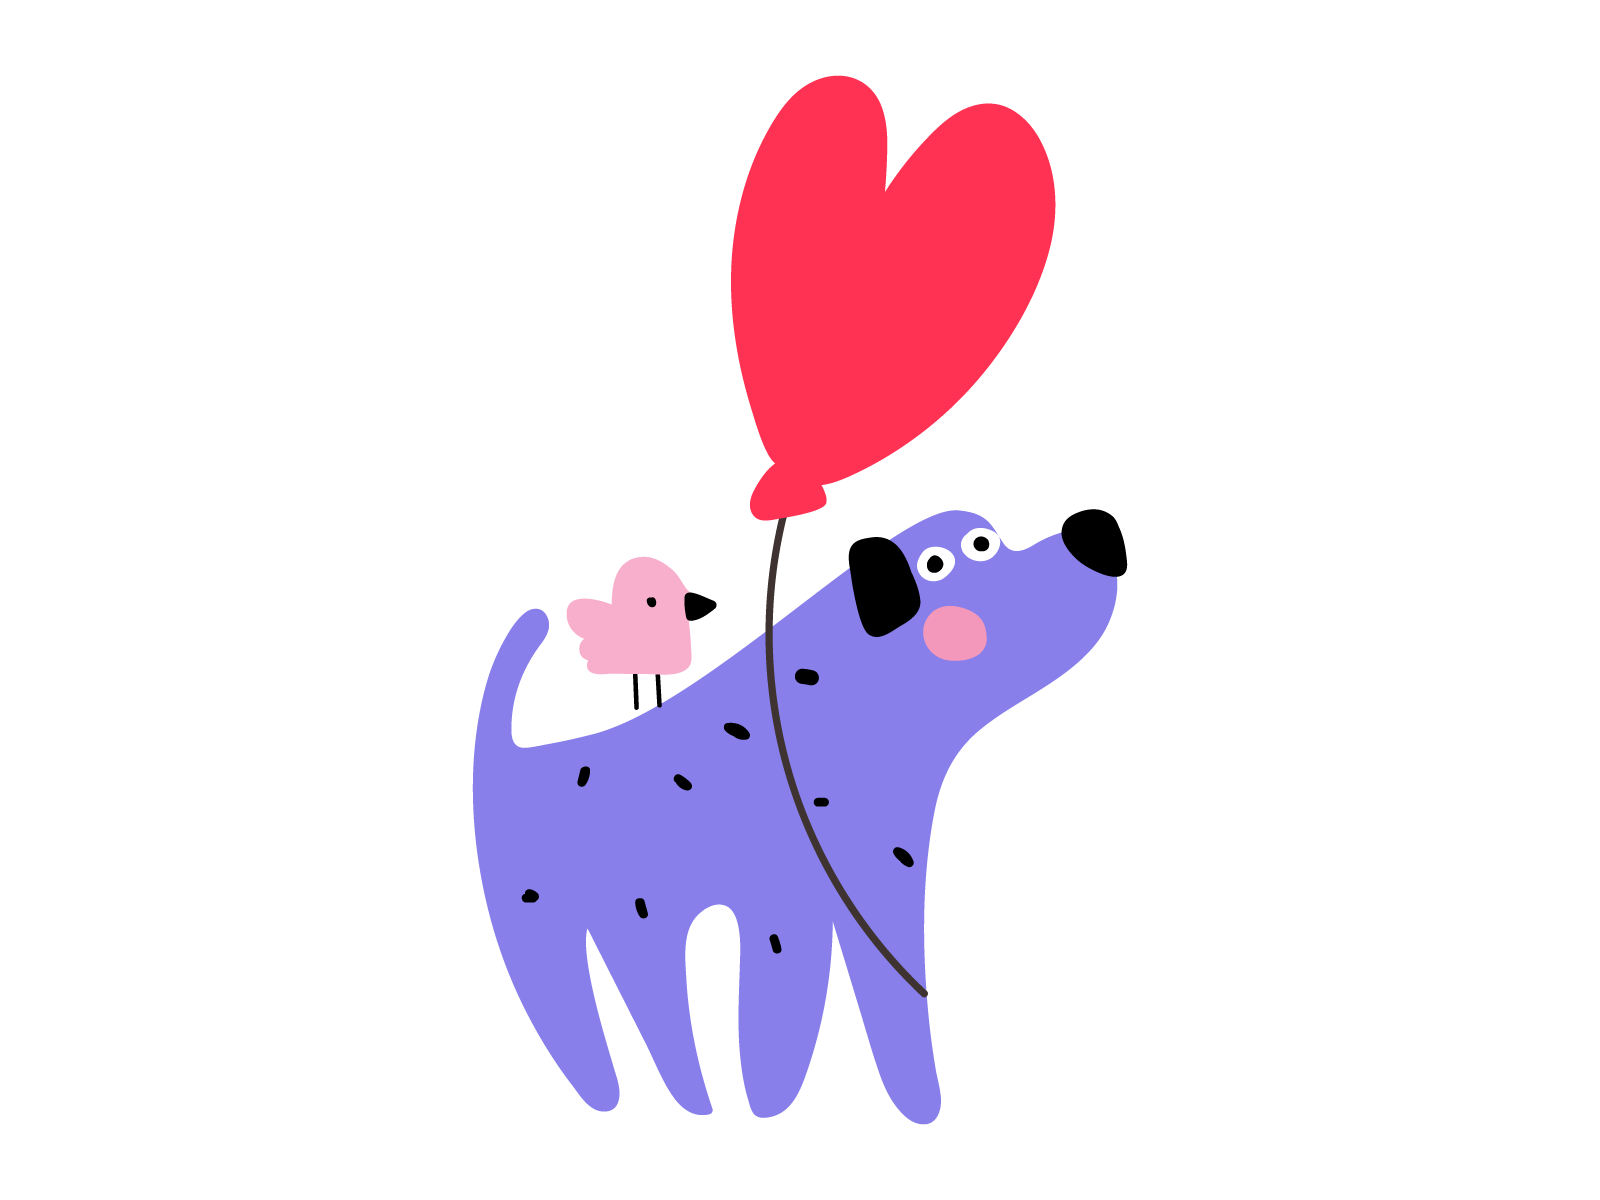 Dog bird balloon balloon bird cute day design dog flat fun humor icon illustration love party valentine vector